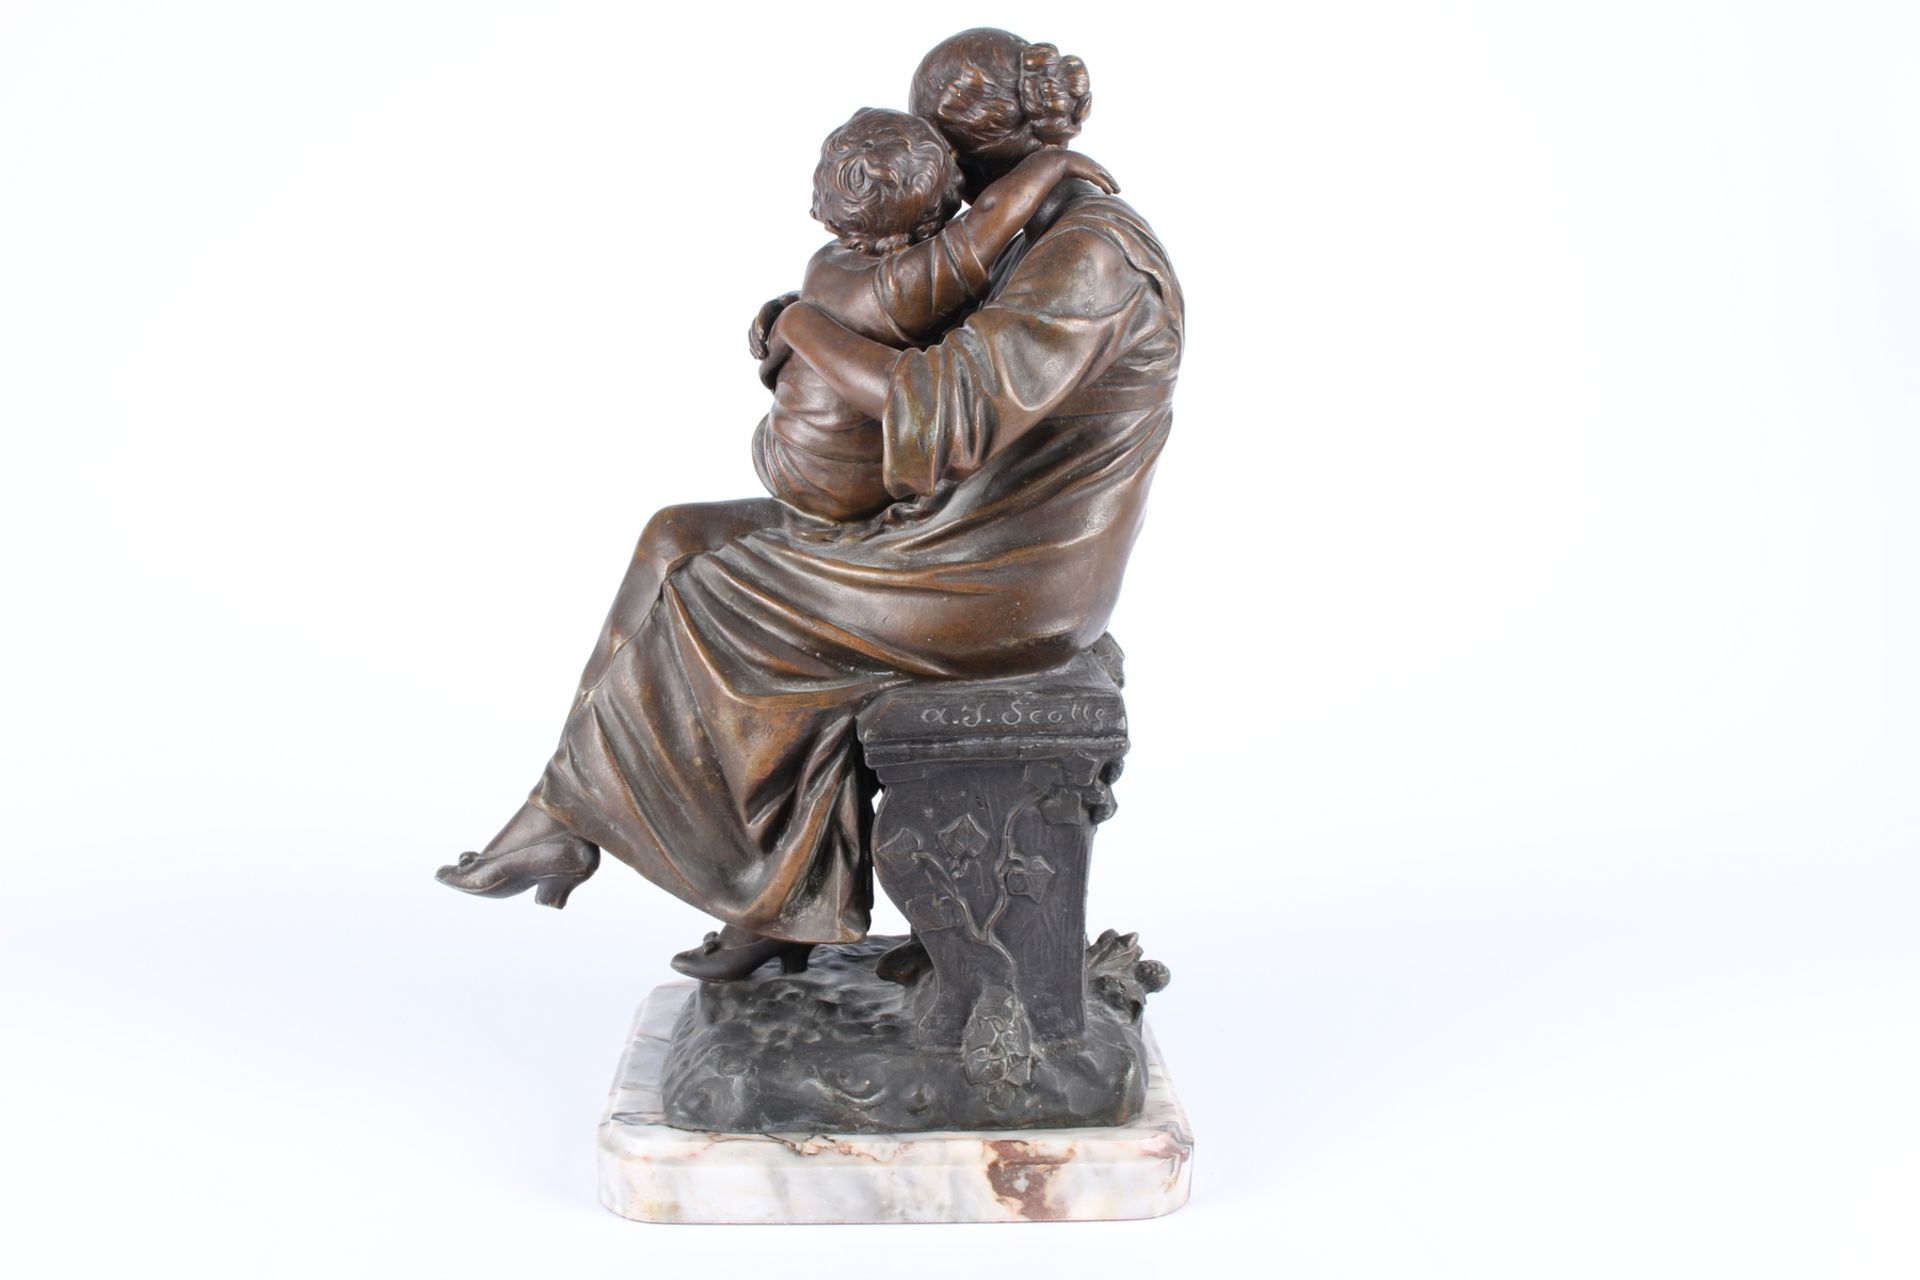 A.J. Scotte (1885-1905) Figur Premiere Caresses - Mutter mit Sohn, bronze sculpture, - Image 5 of 7